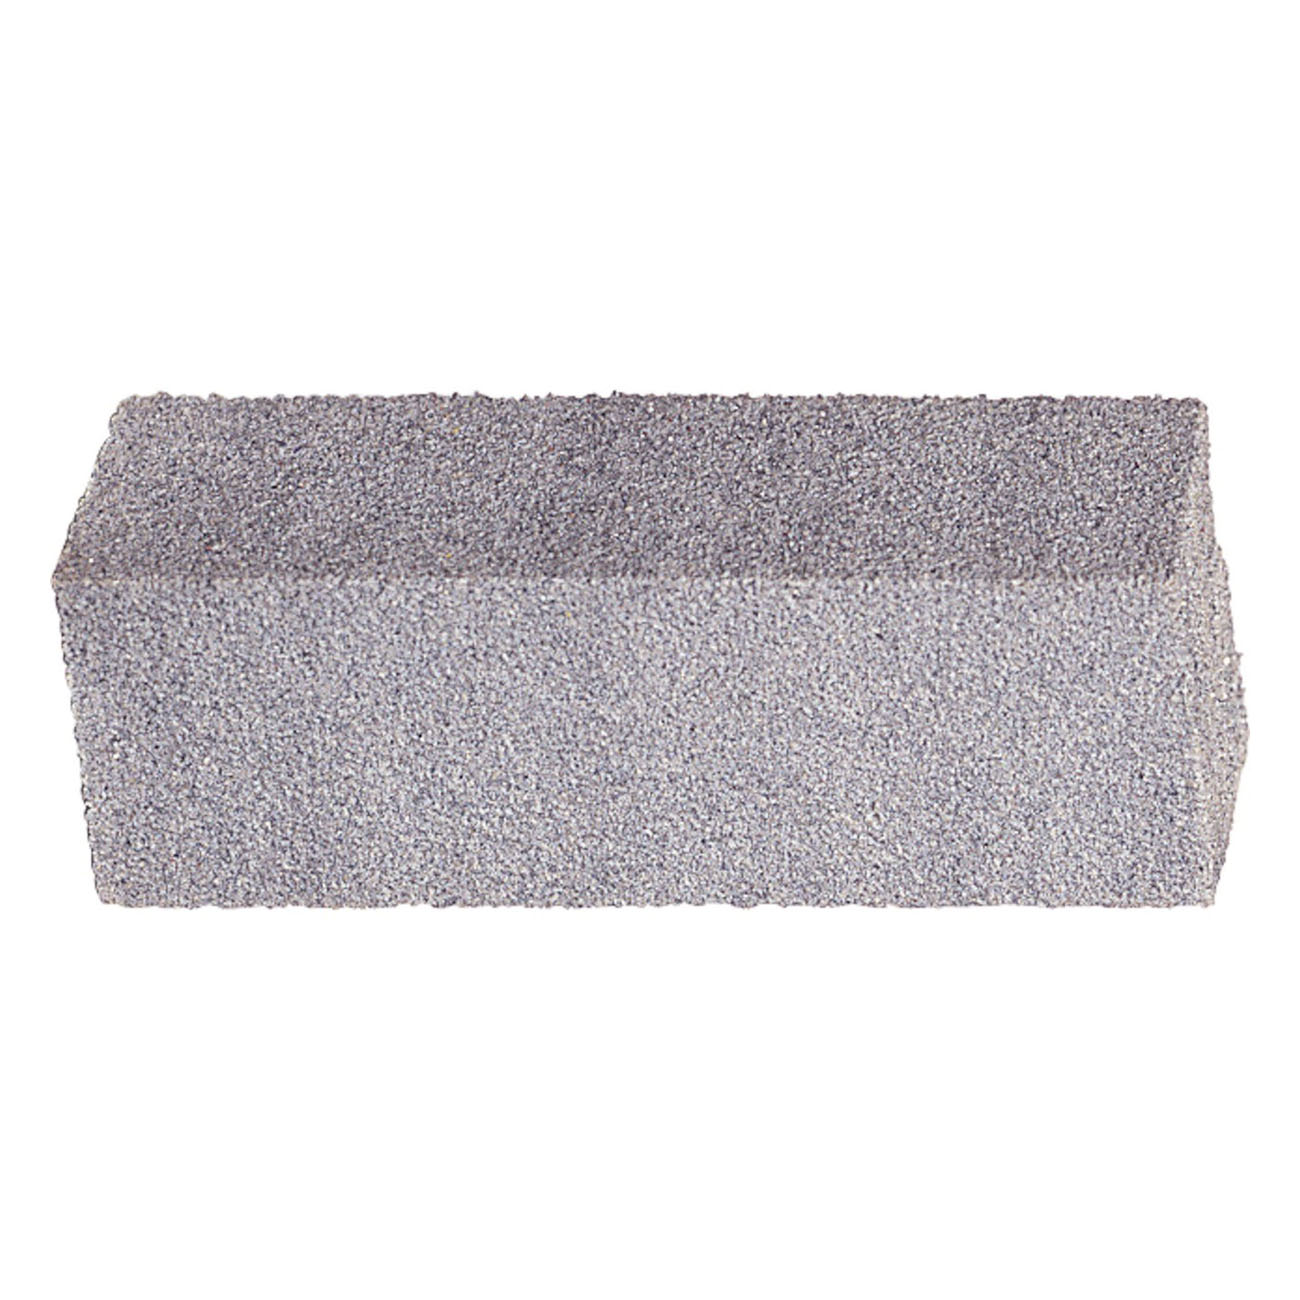 Swix T0992 Soft Paver Stone, Rubber, Gray - 1